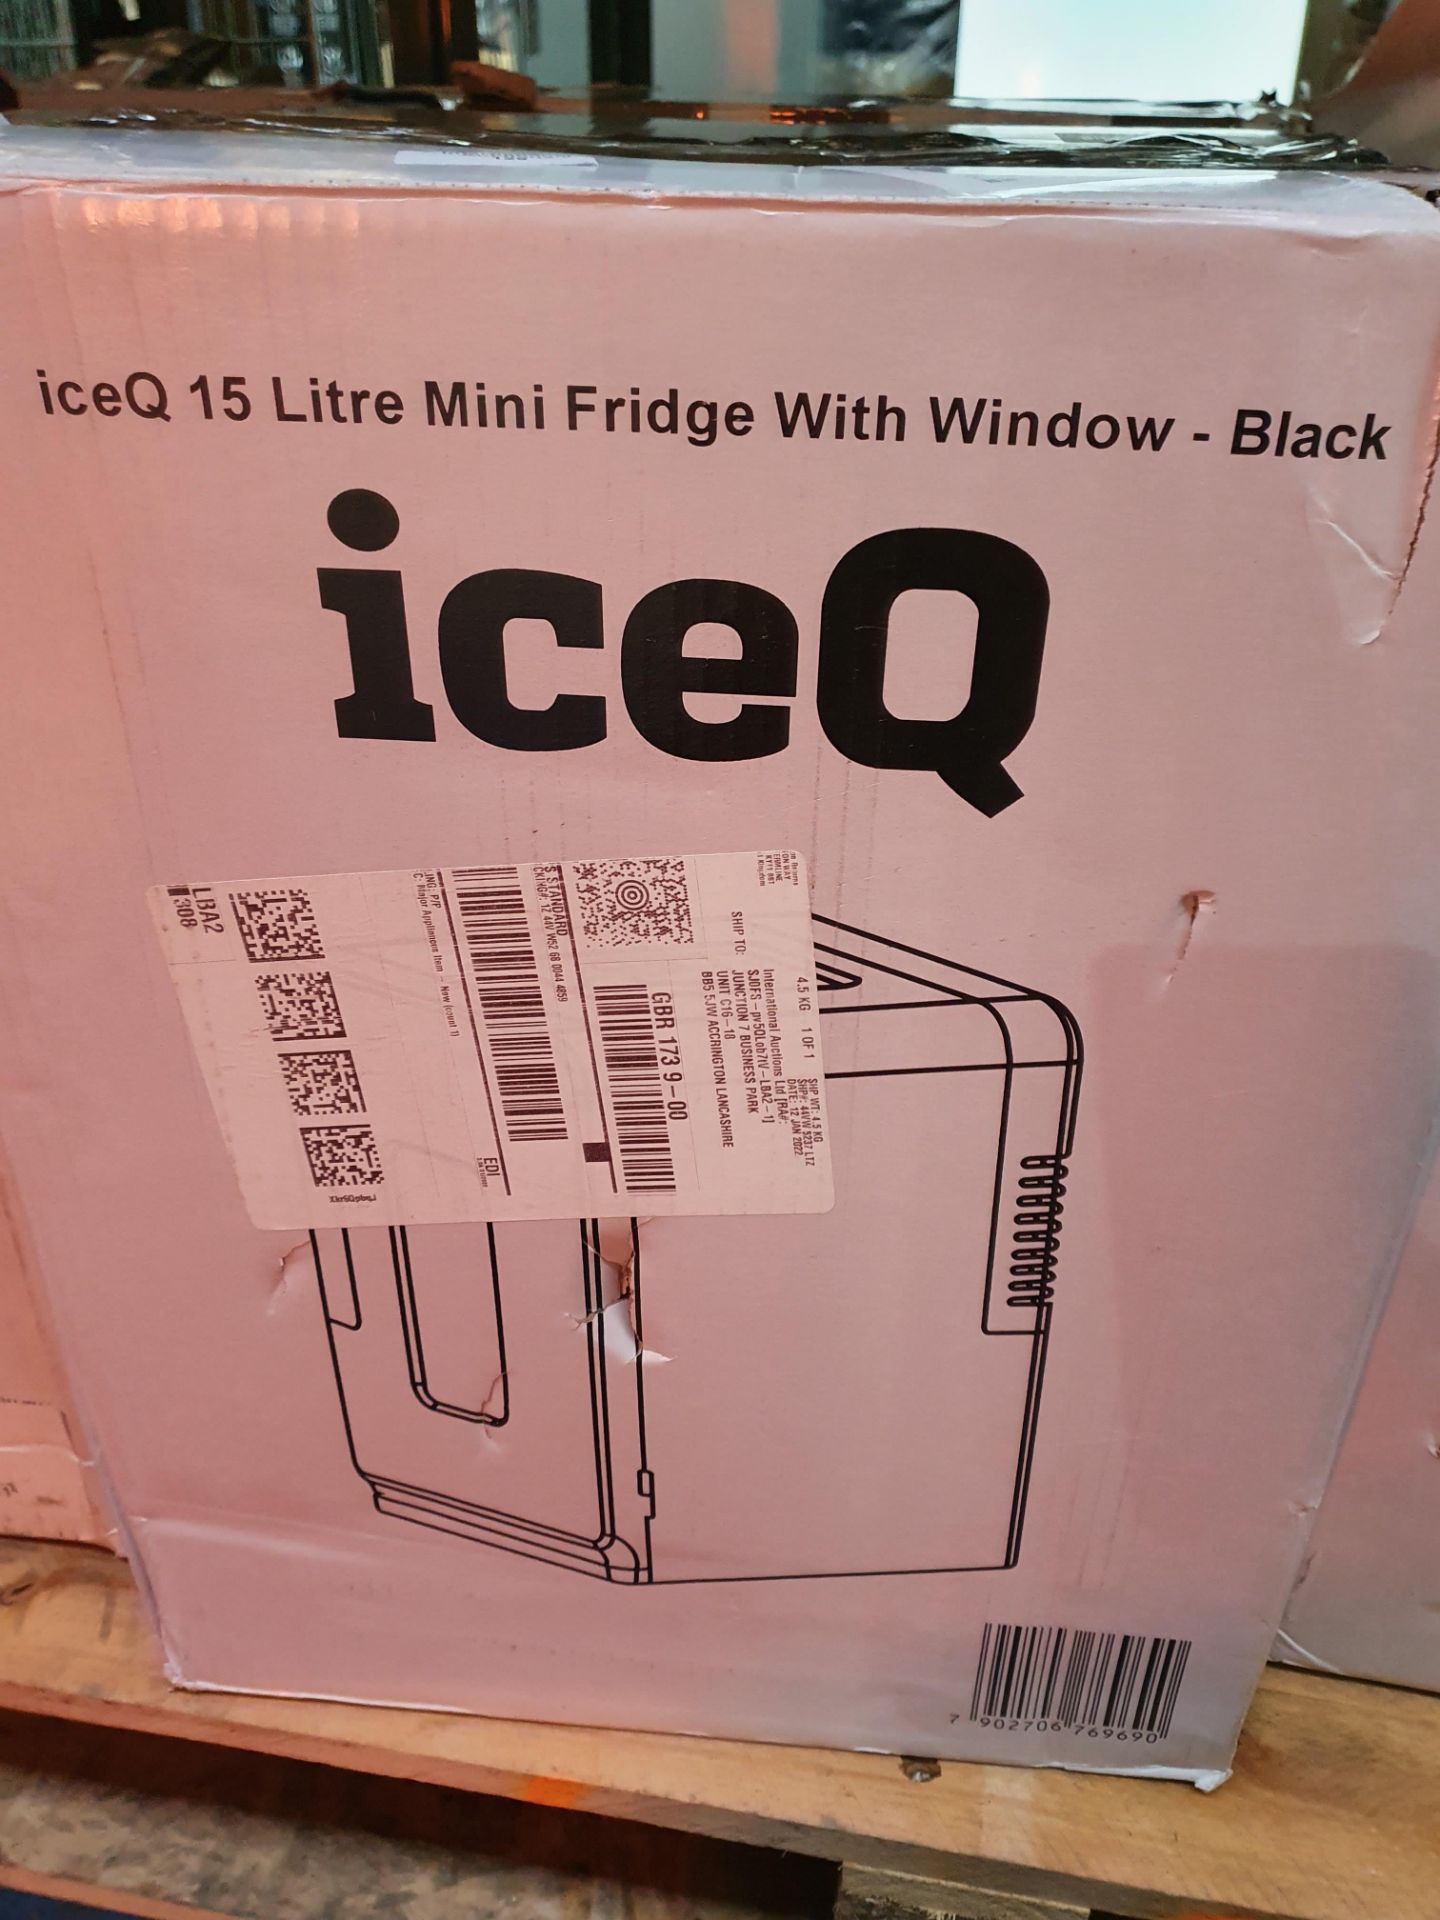 RRP £69.98 iceQ 15 Litre Deluxe Portable Mini Fridge With Window - Image 2 of 2